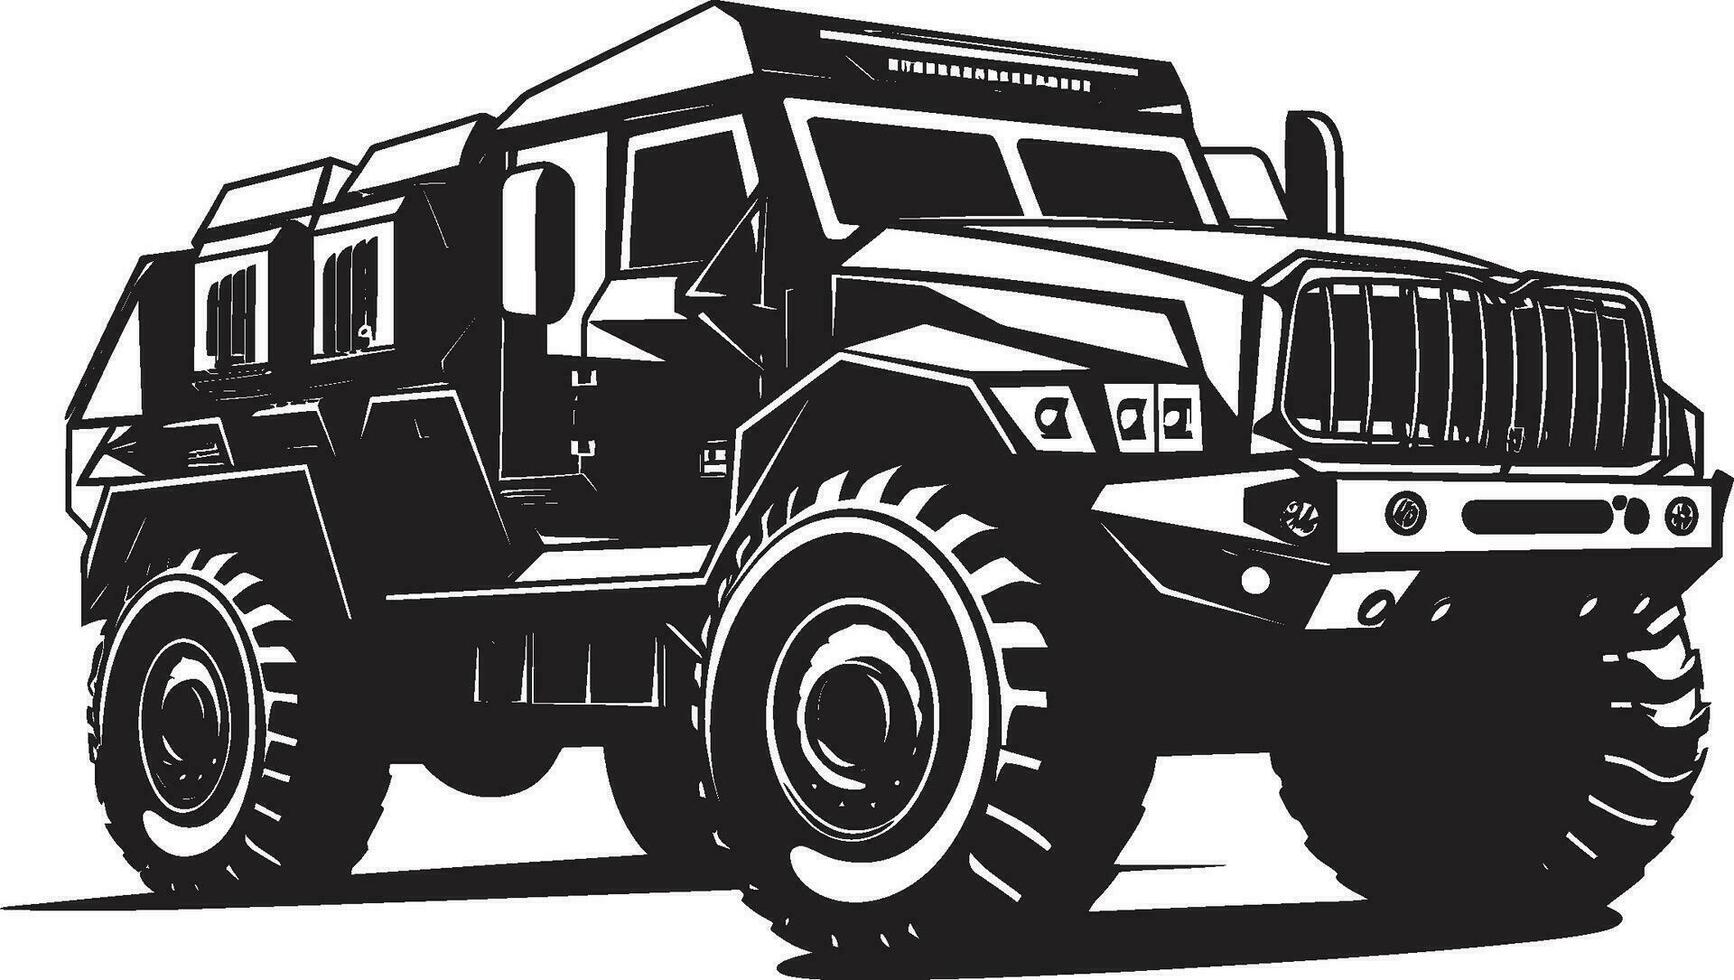 krijger s rijden zwart leger 4x4 logo gevecht kruiser vector leger symbool